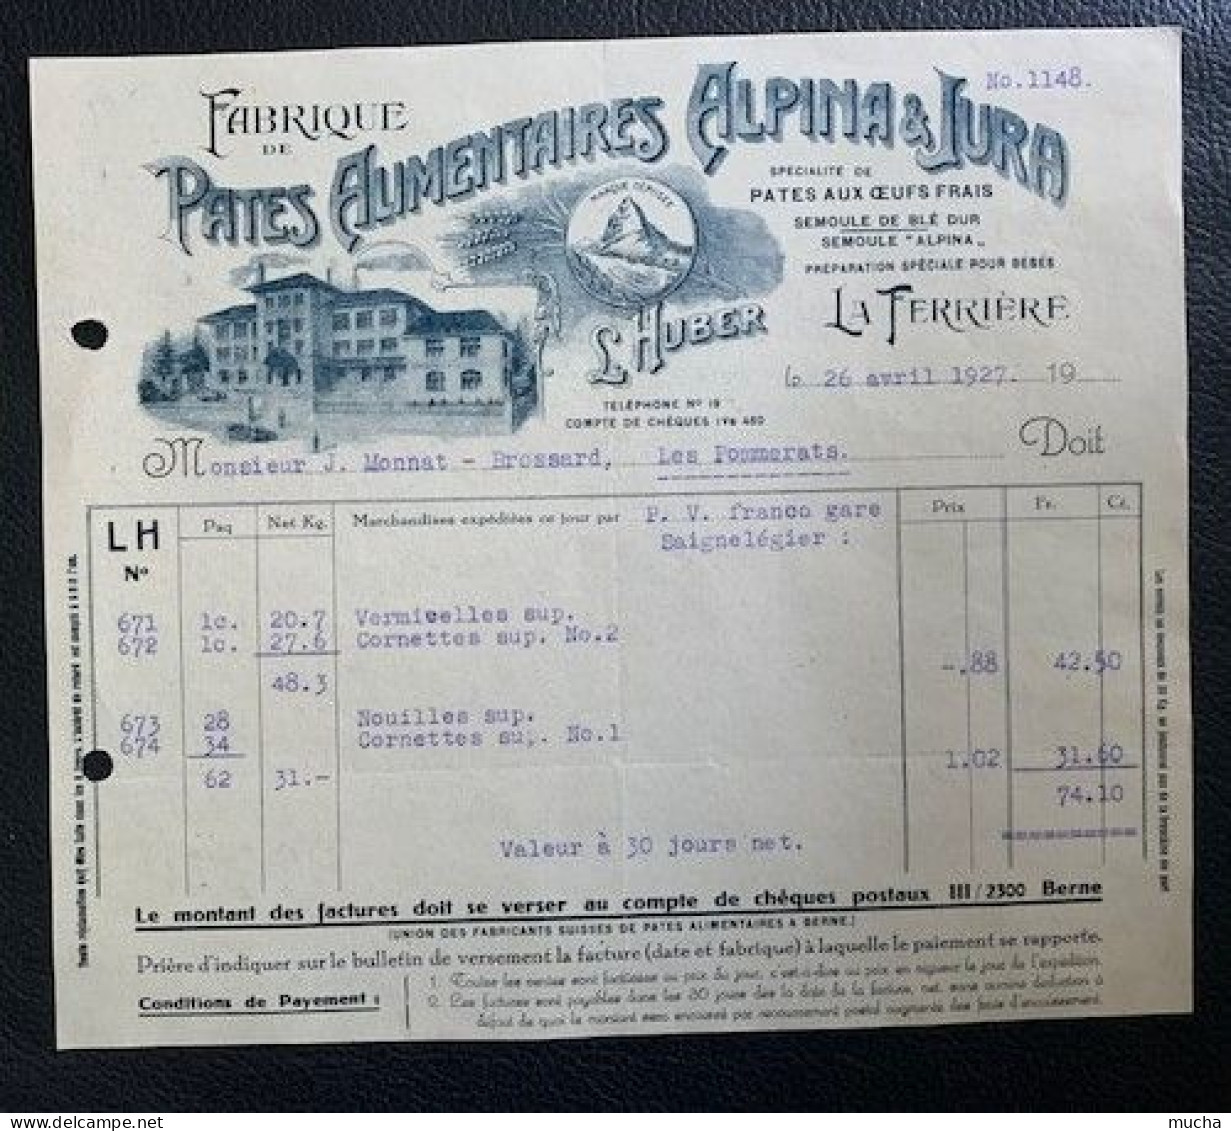 70148 - Facture Illustrée Pates Alimentaires Alpina & Jura La Ferrière 26.04.1922 - Schweiz